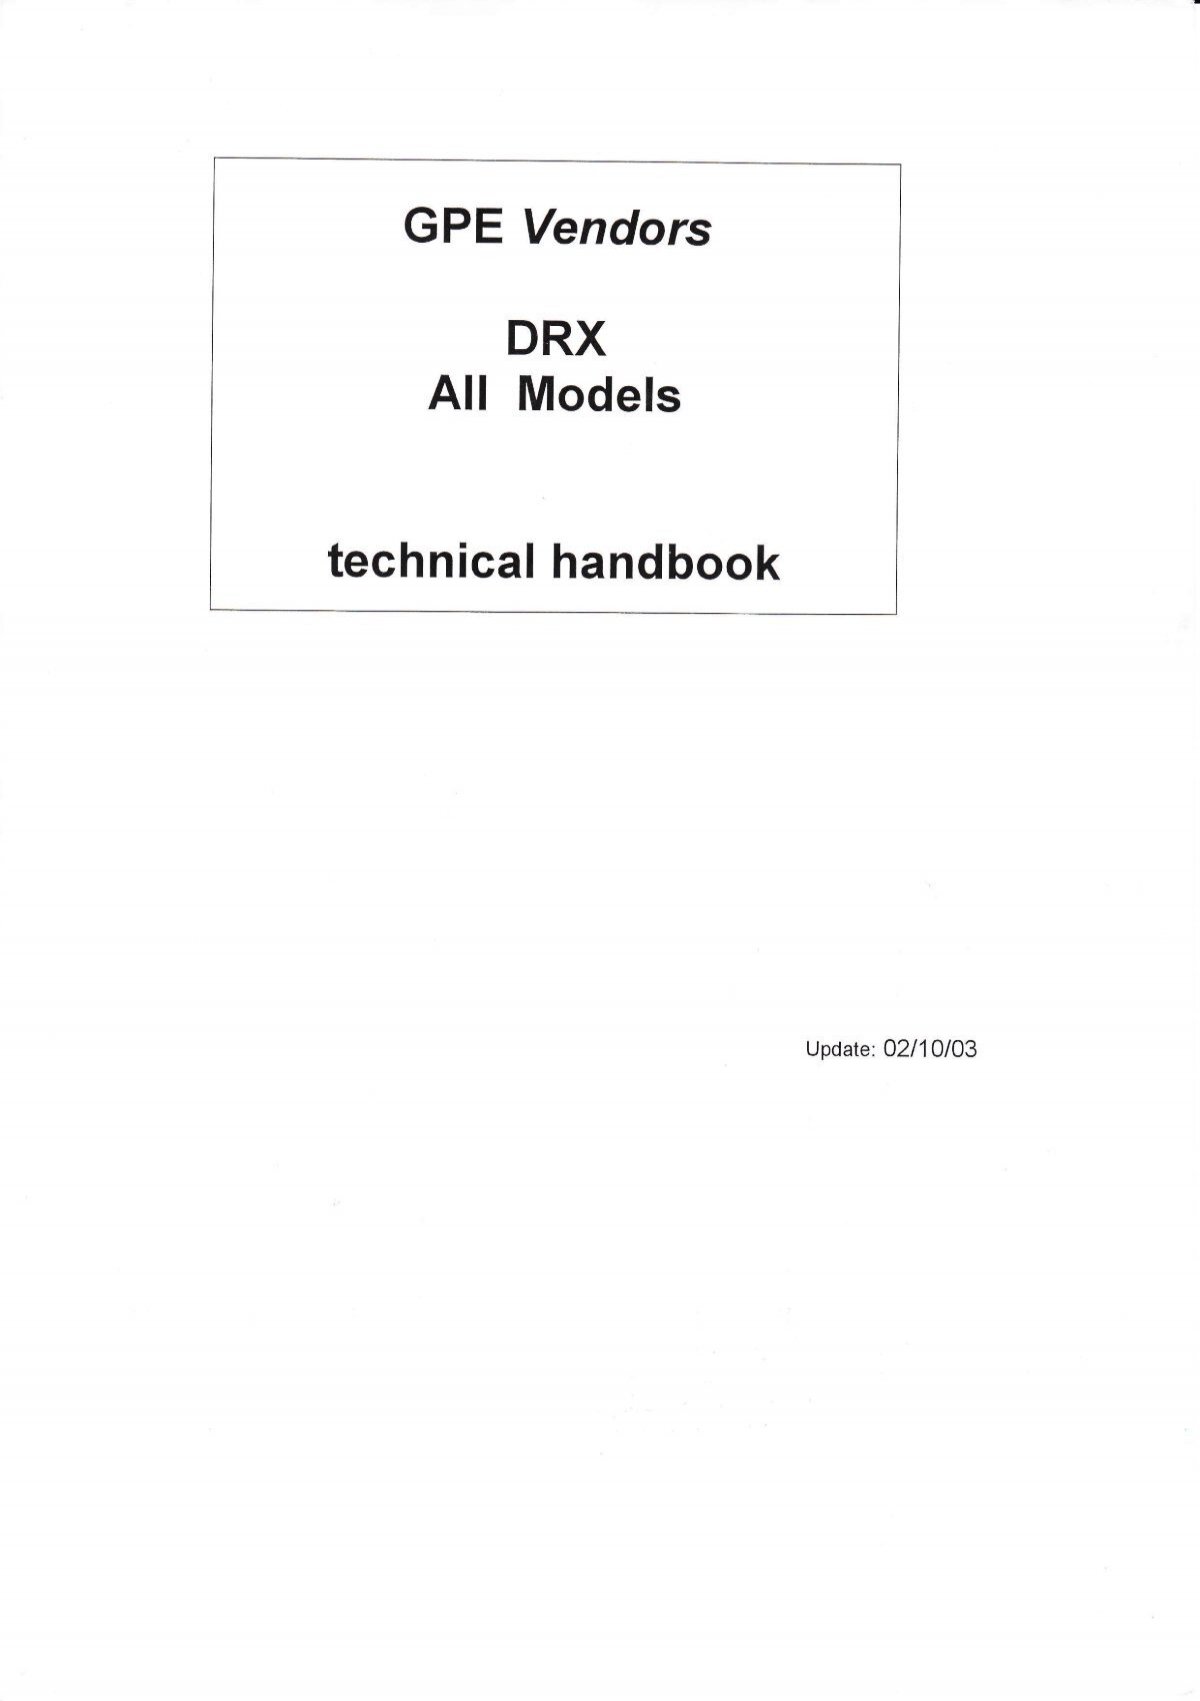 Technical Handbook Gpe Vendors